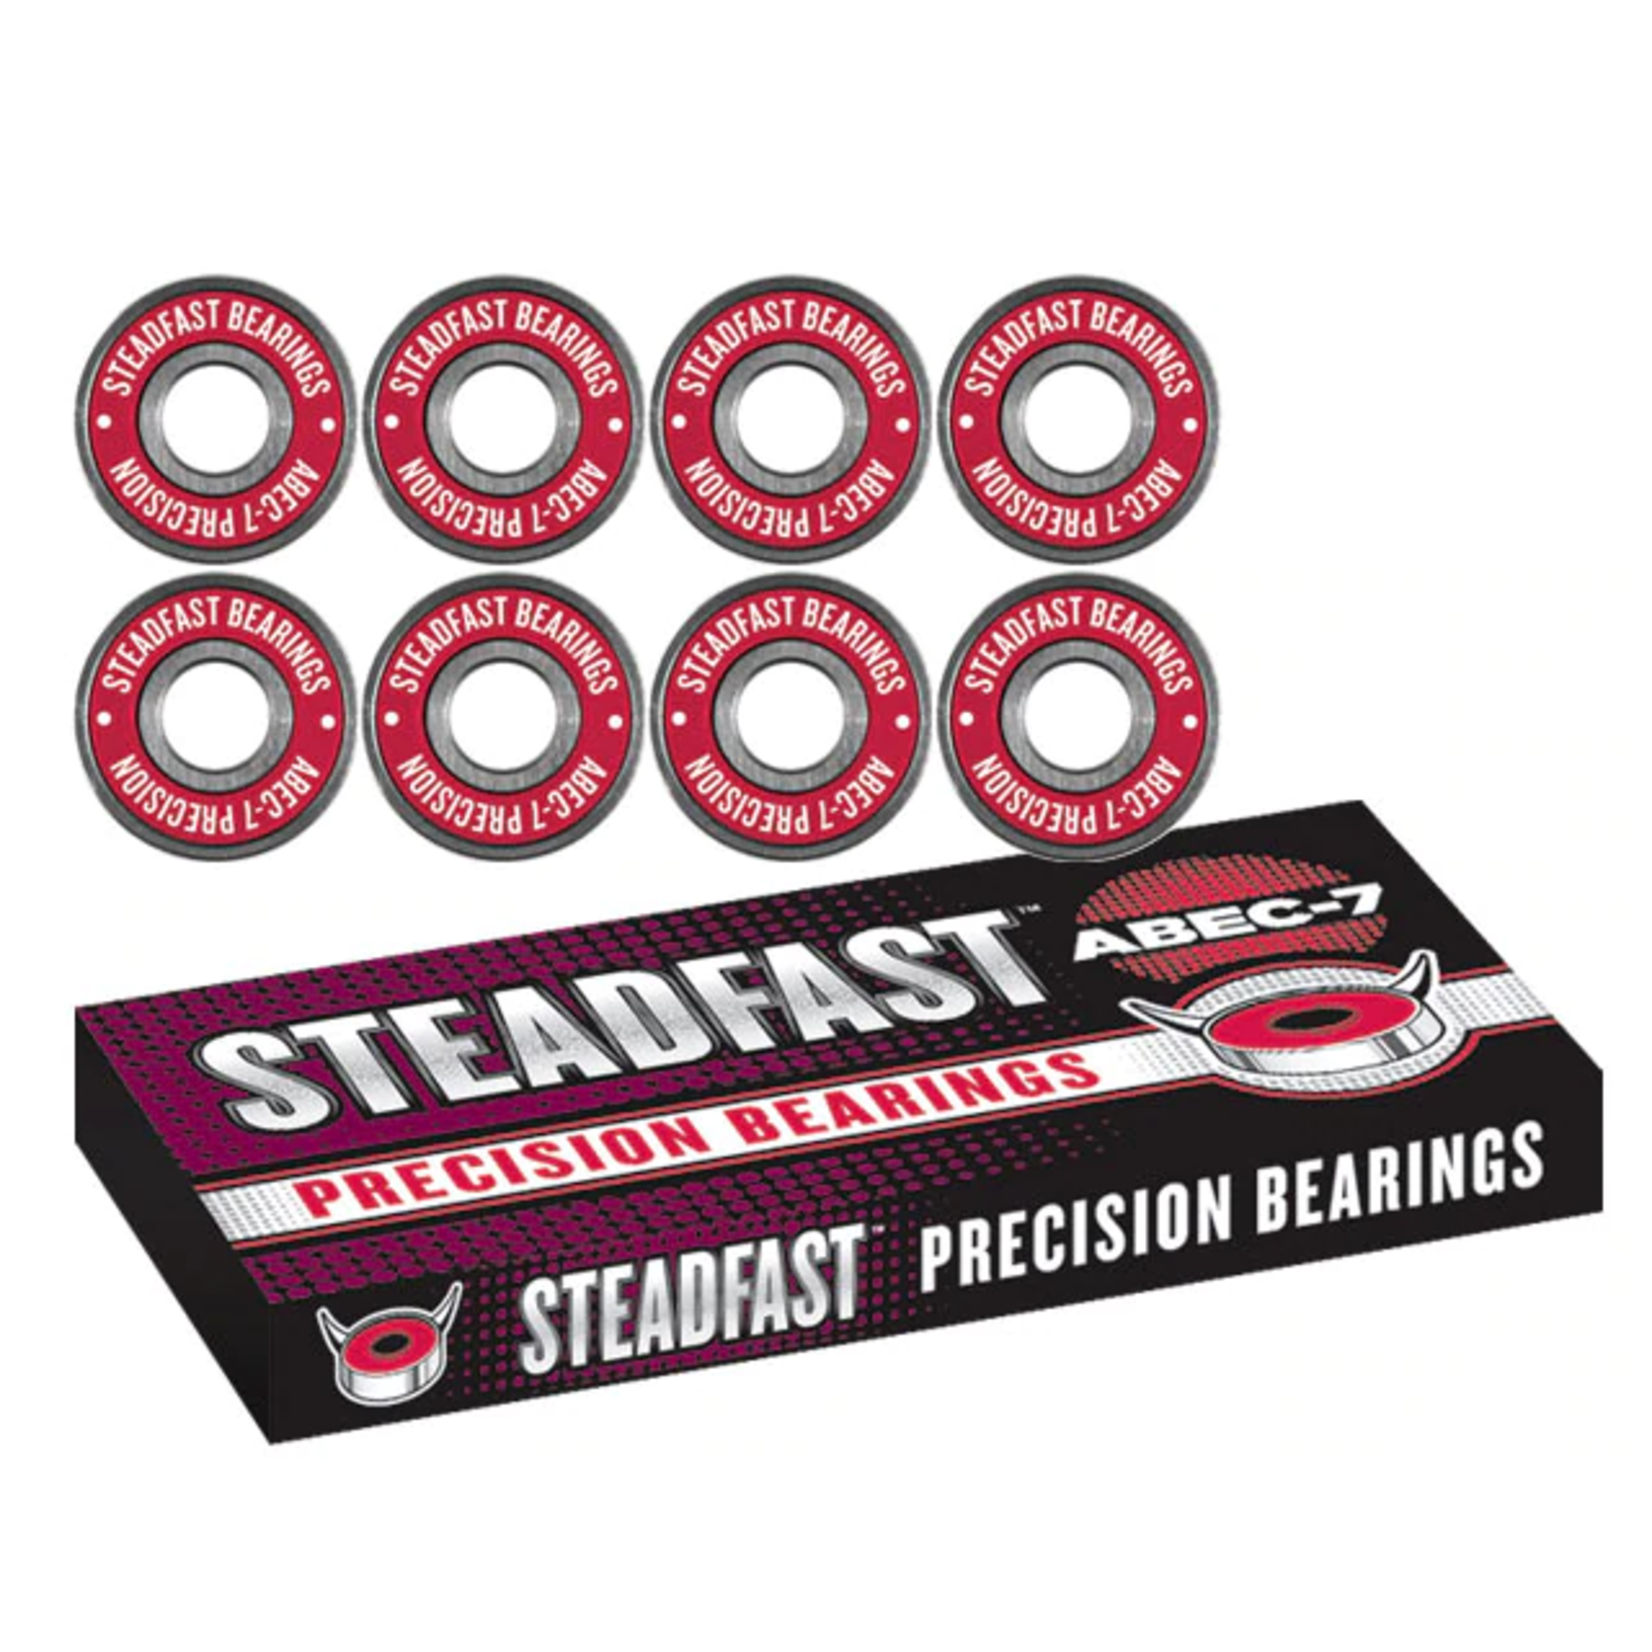 Steadfast ABEC-7 Bearings